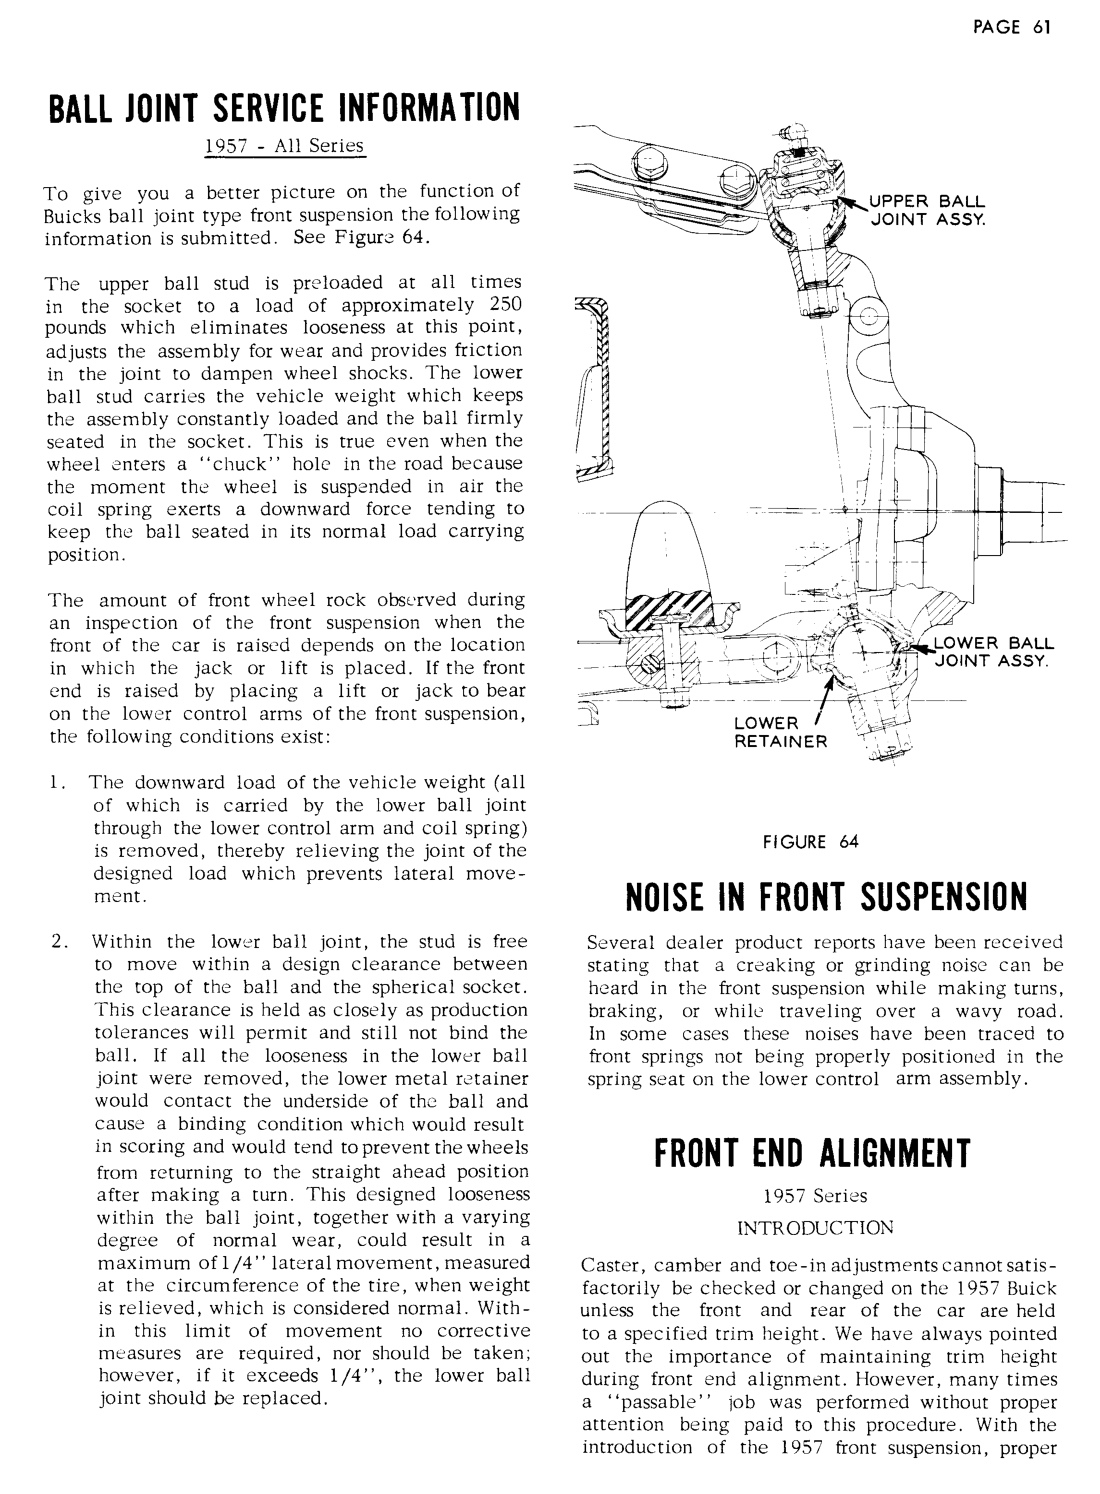 n_1957 Buick Product Service  Bulletins-066-066.jpg